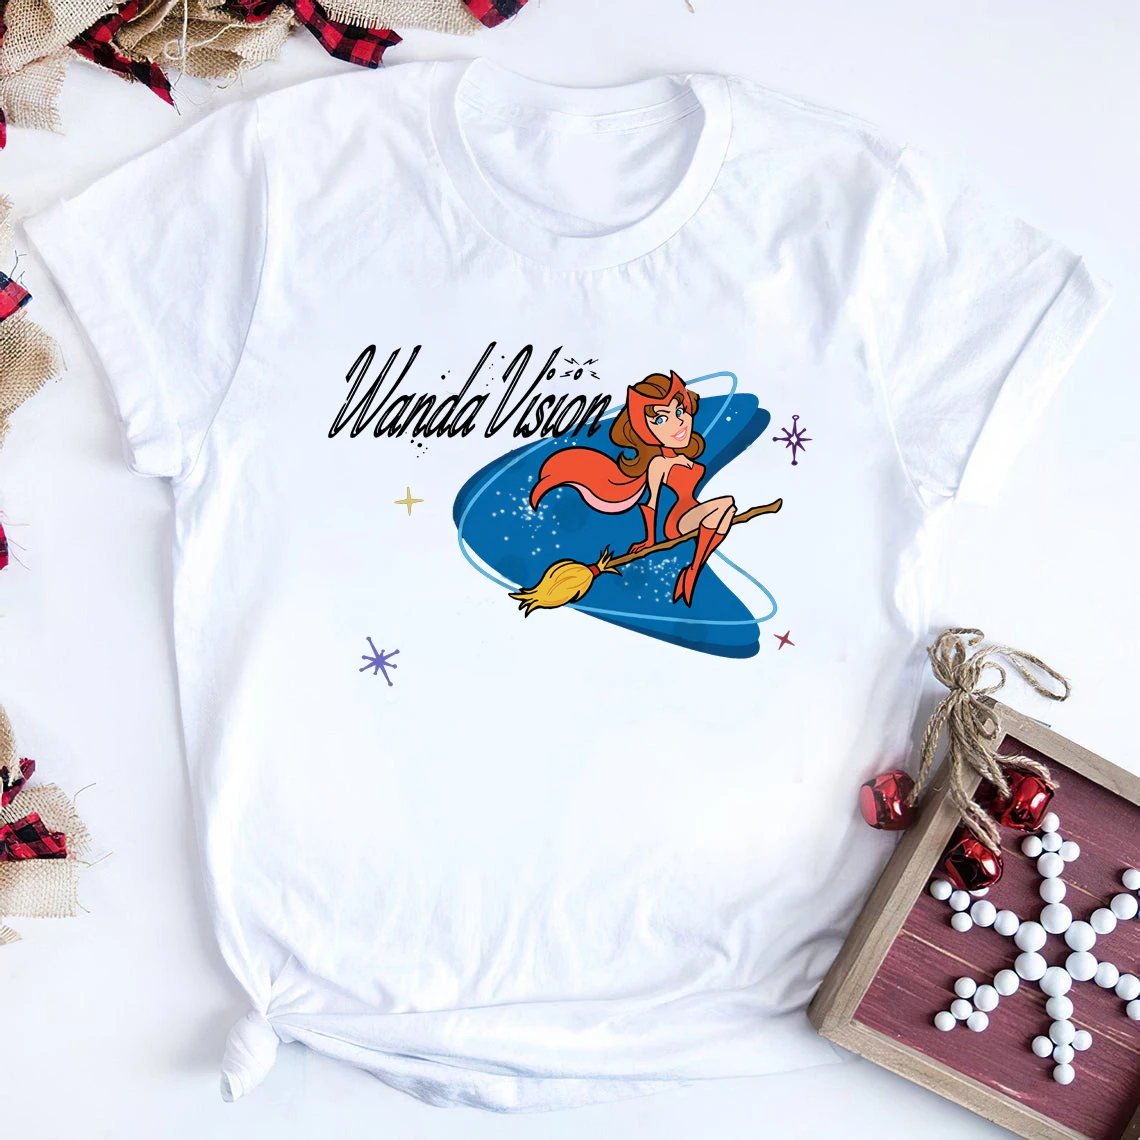 WandaVision Retro-Camiseta con estampado de bruja escarlata, ropa para Parte Superior Femenina, de estilo Hipster, con diseño Re